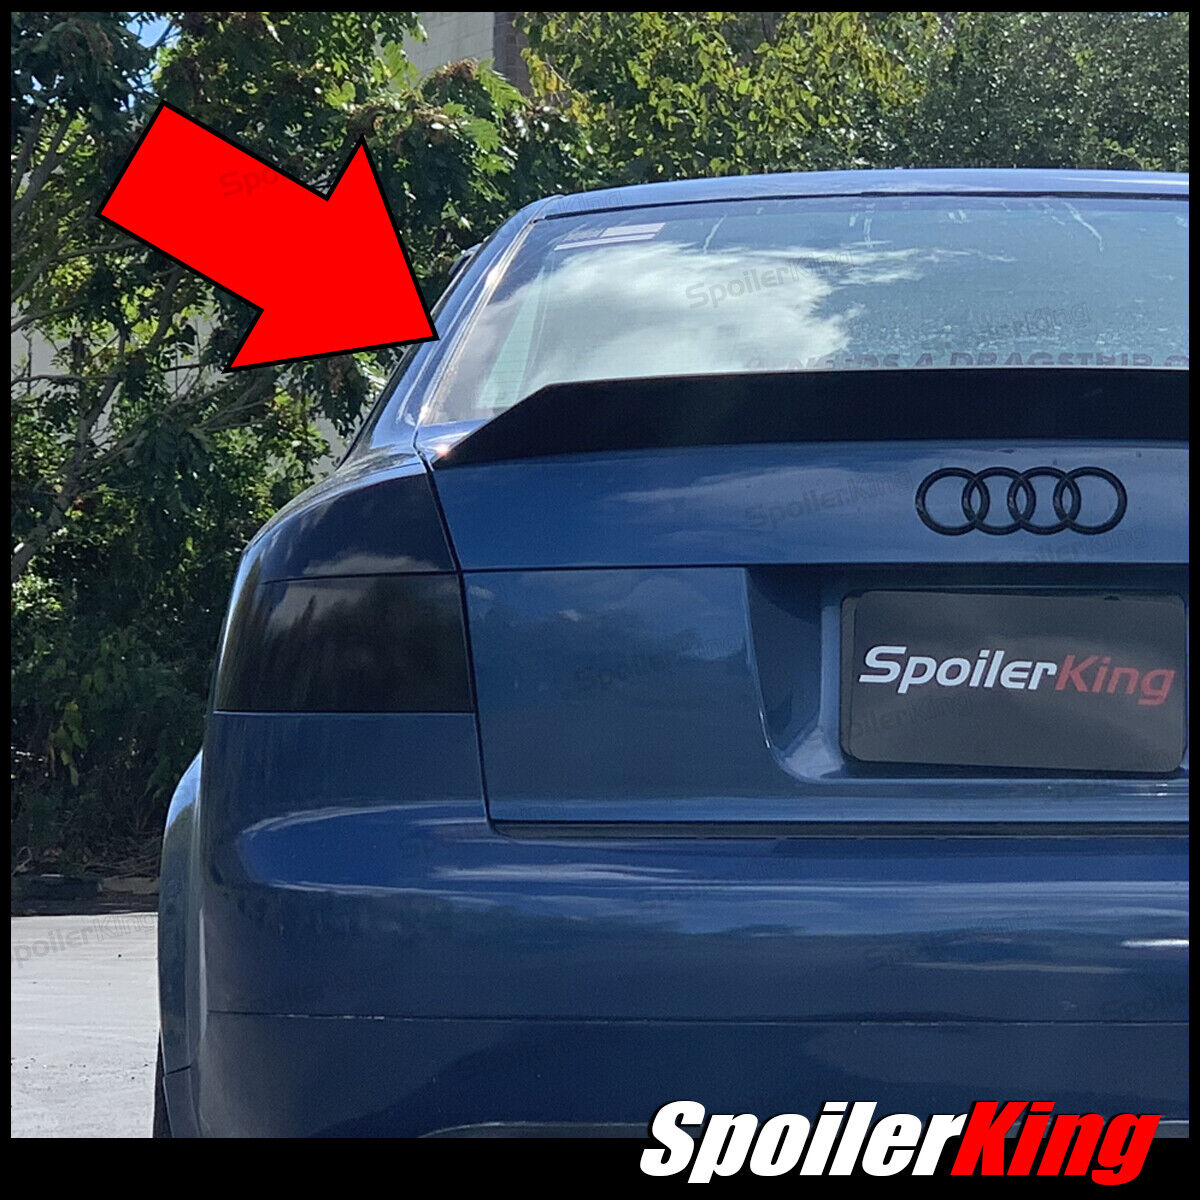 SpoilerKing (380P) Fits: Audi A4 /S4 B6 2002-2005 Rear Euro trunk spoiler wing